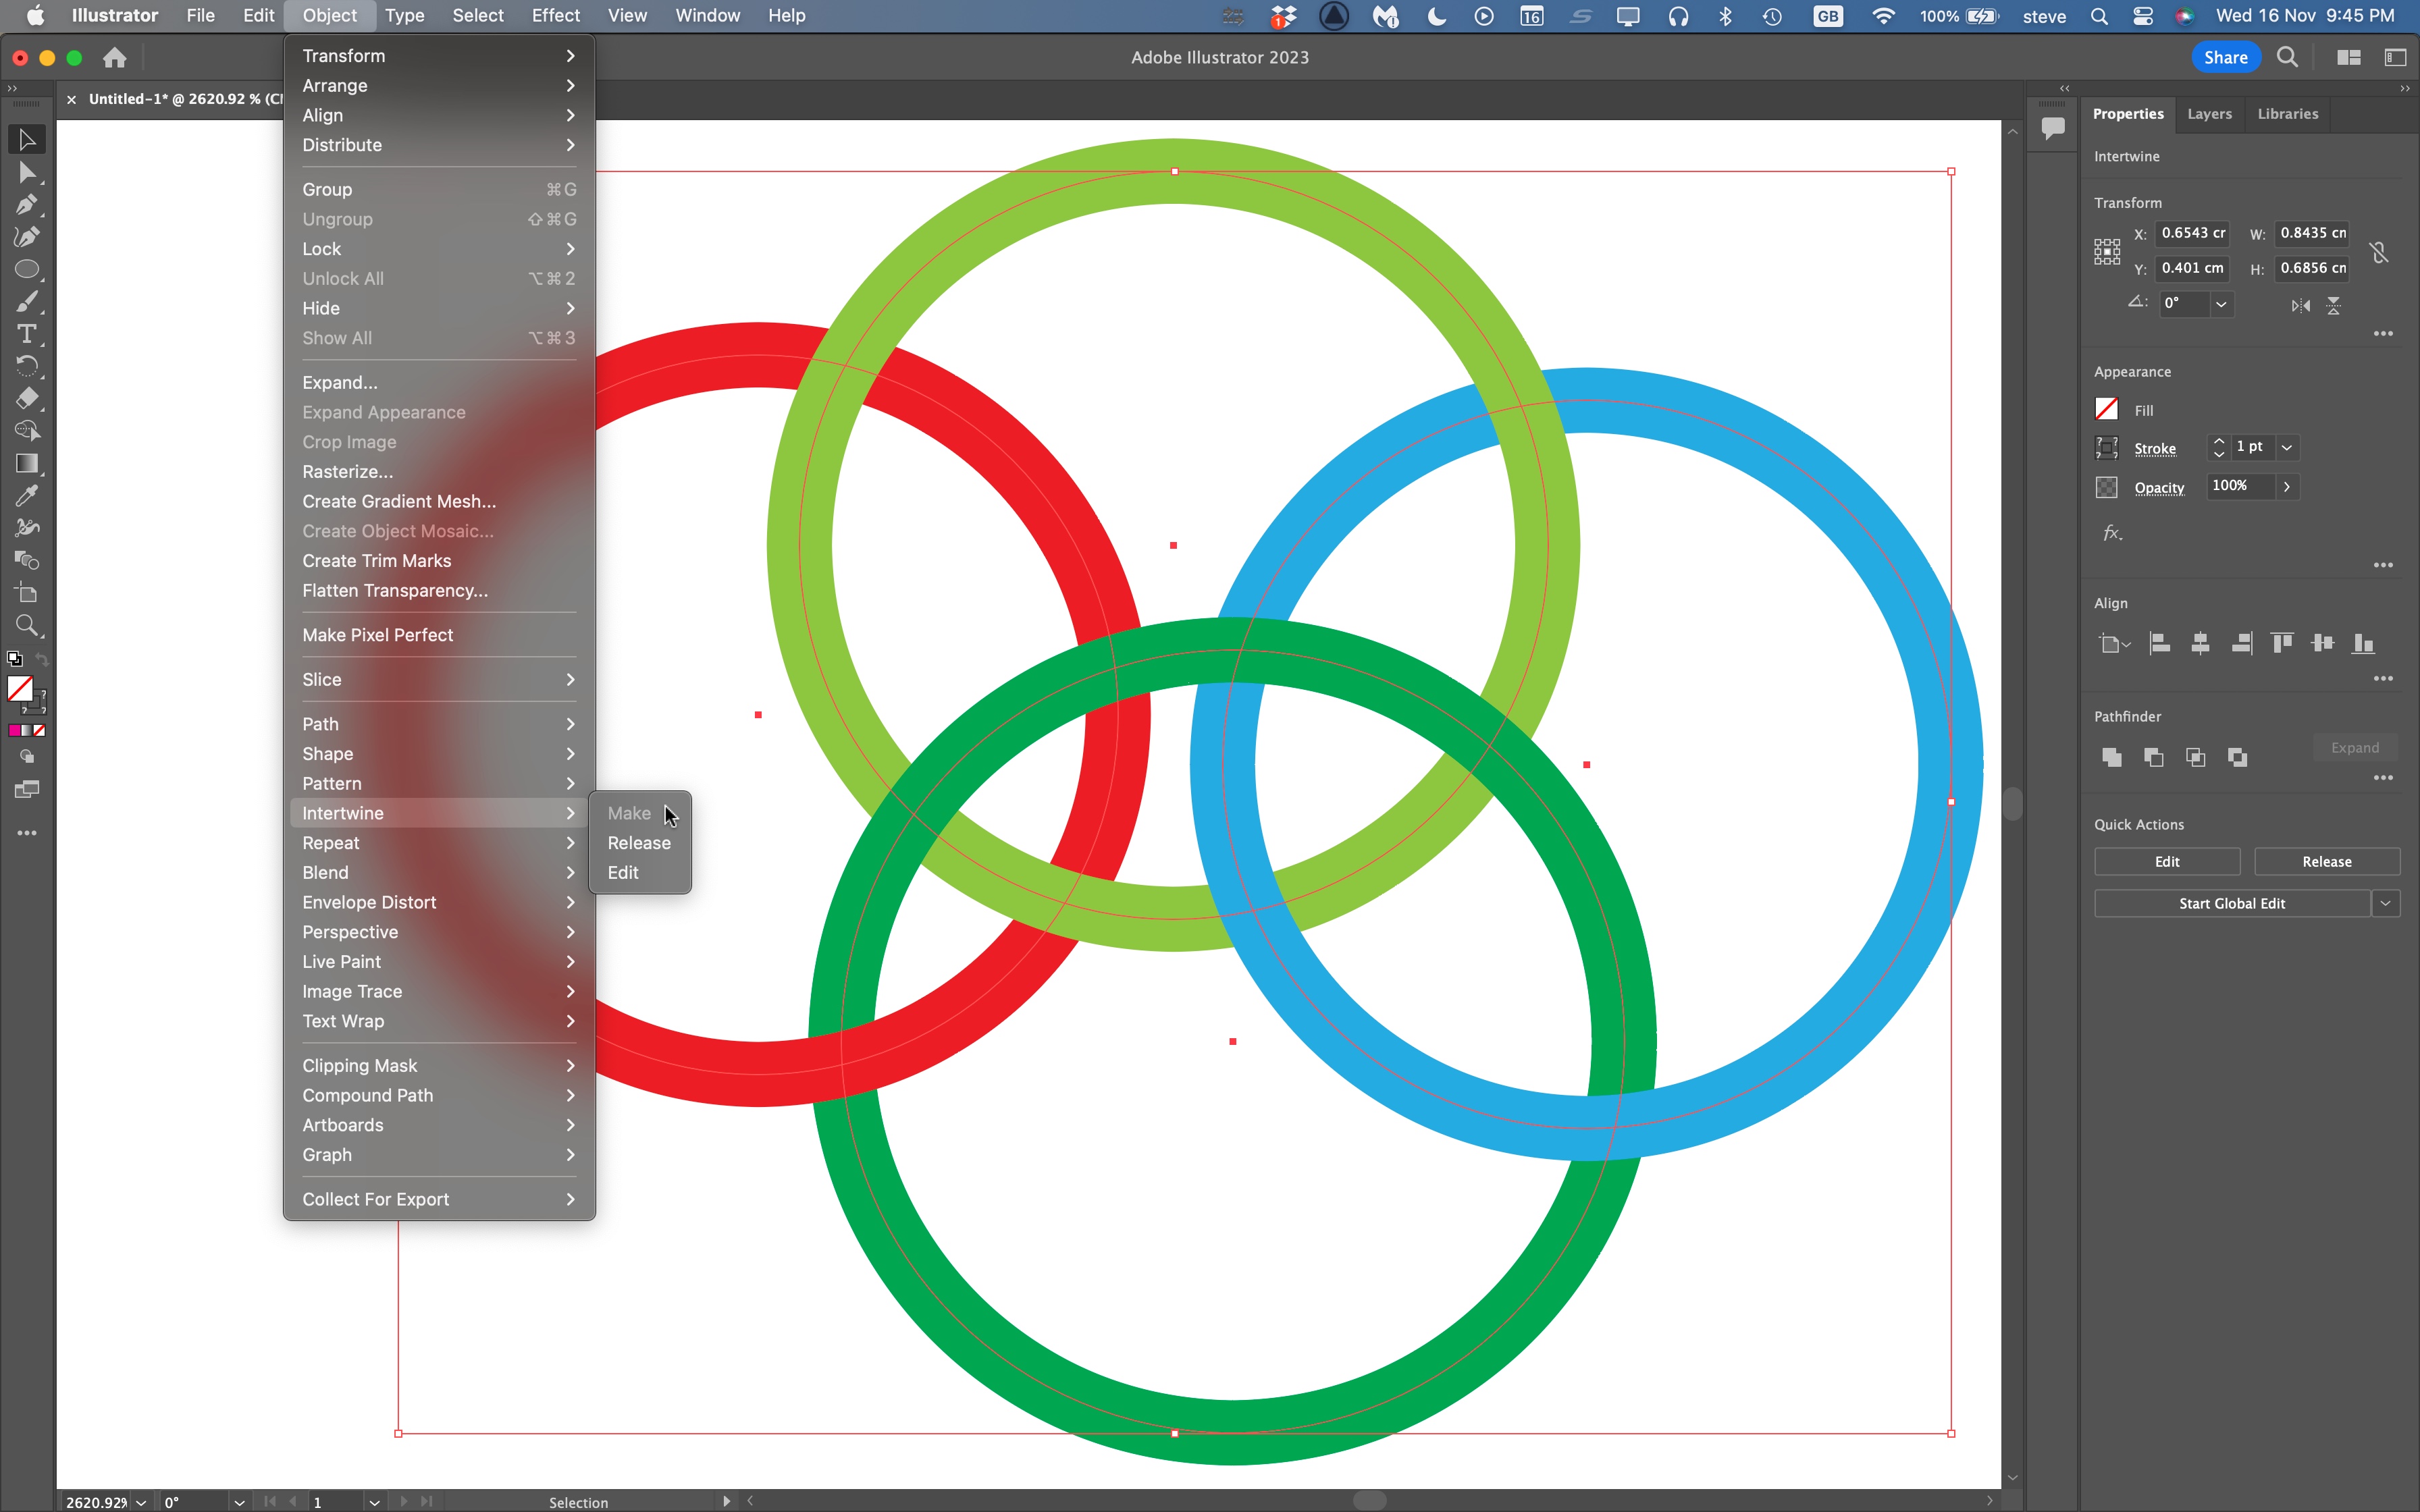 Adobe Illustrator graphic design software in action